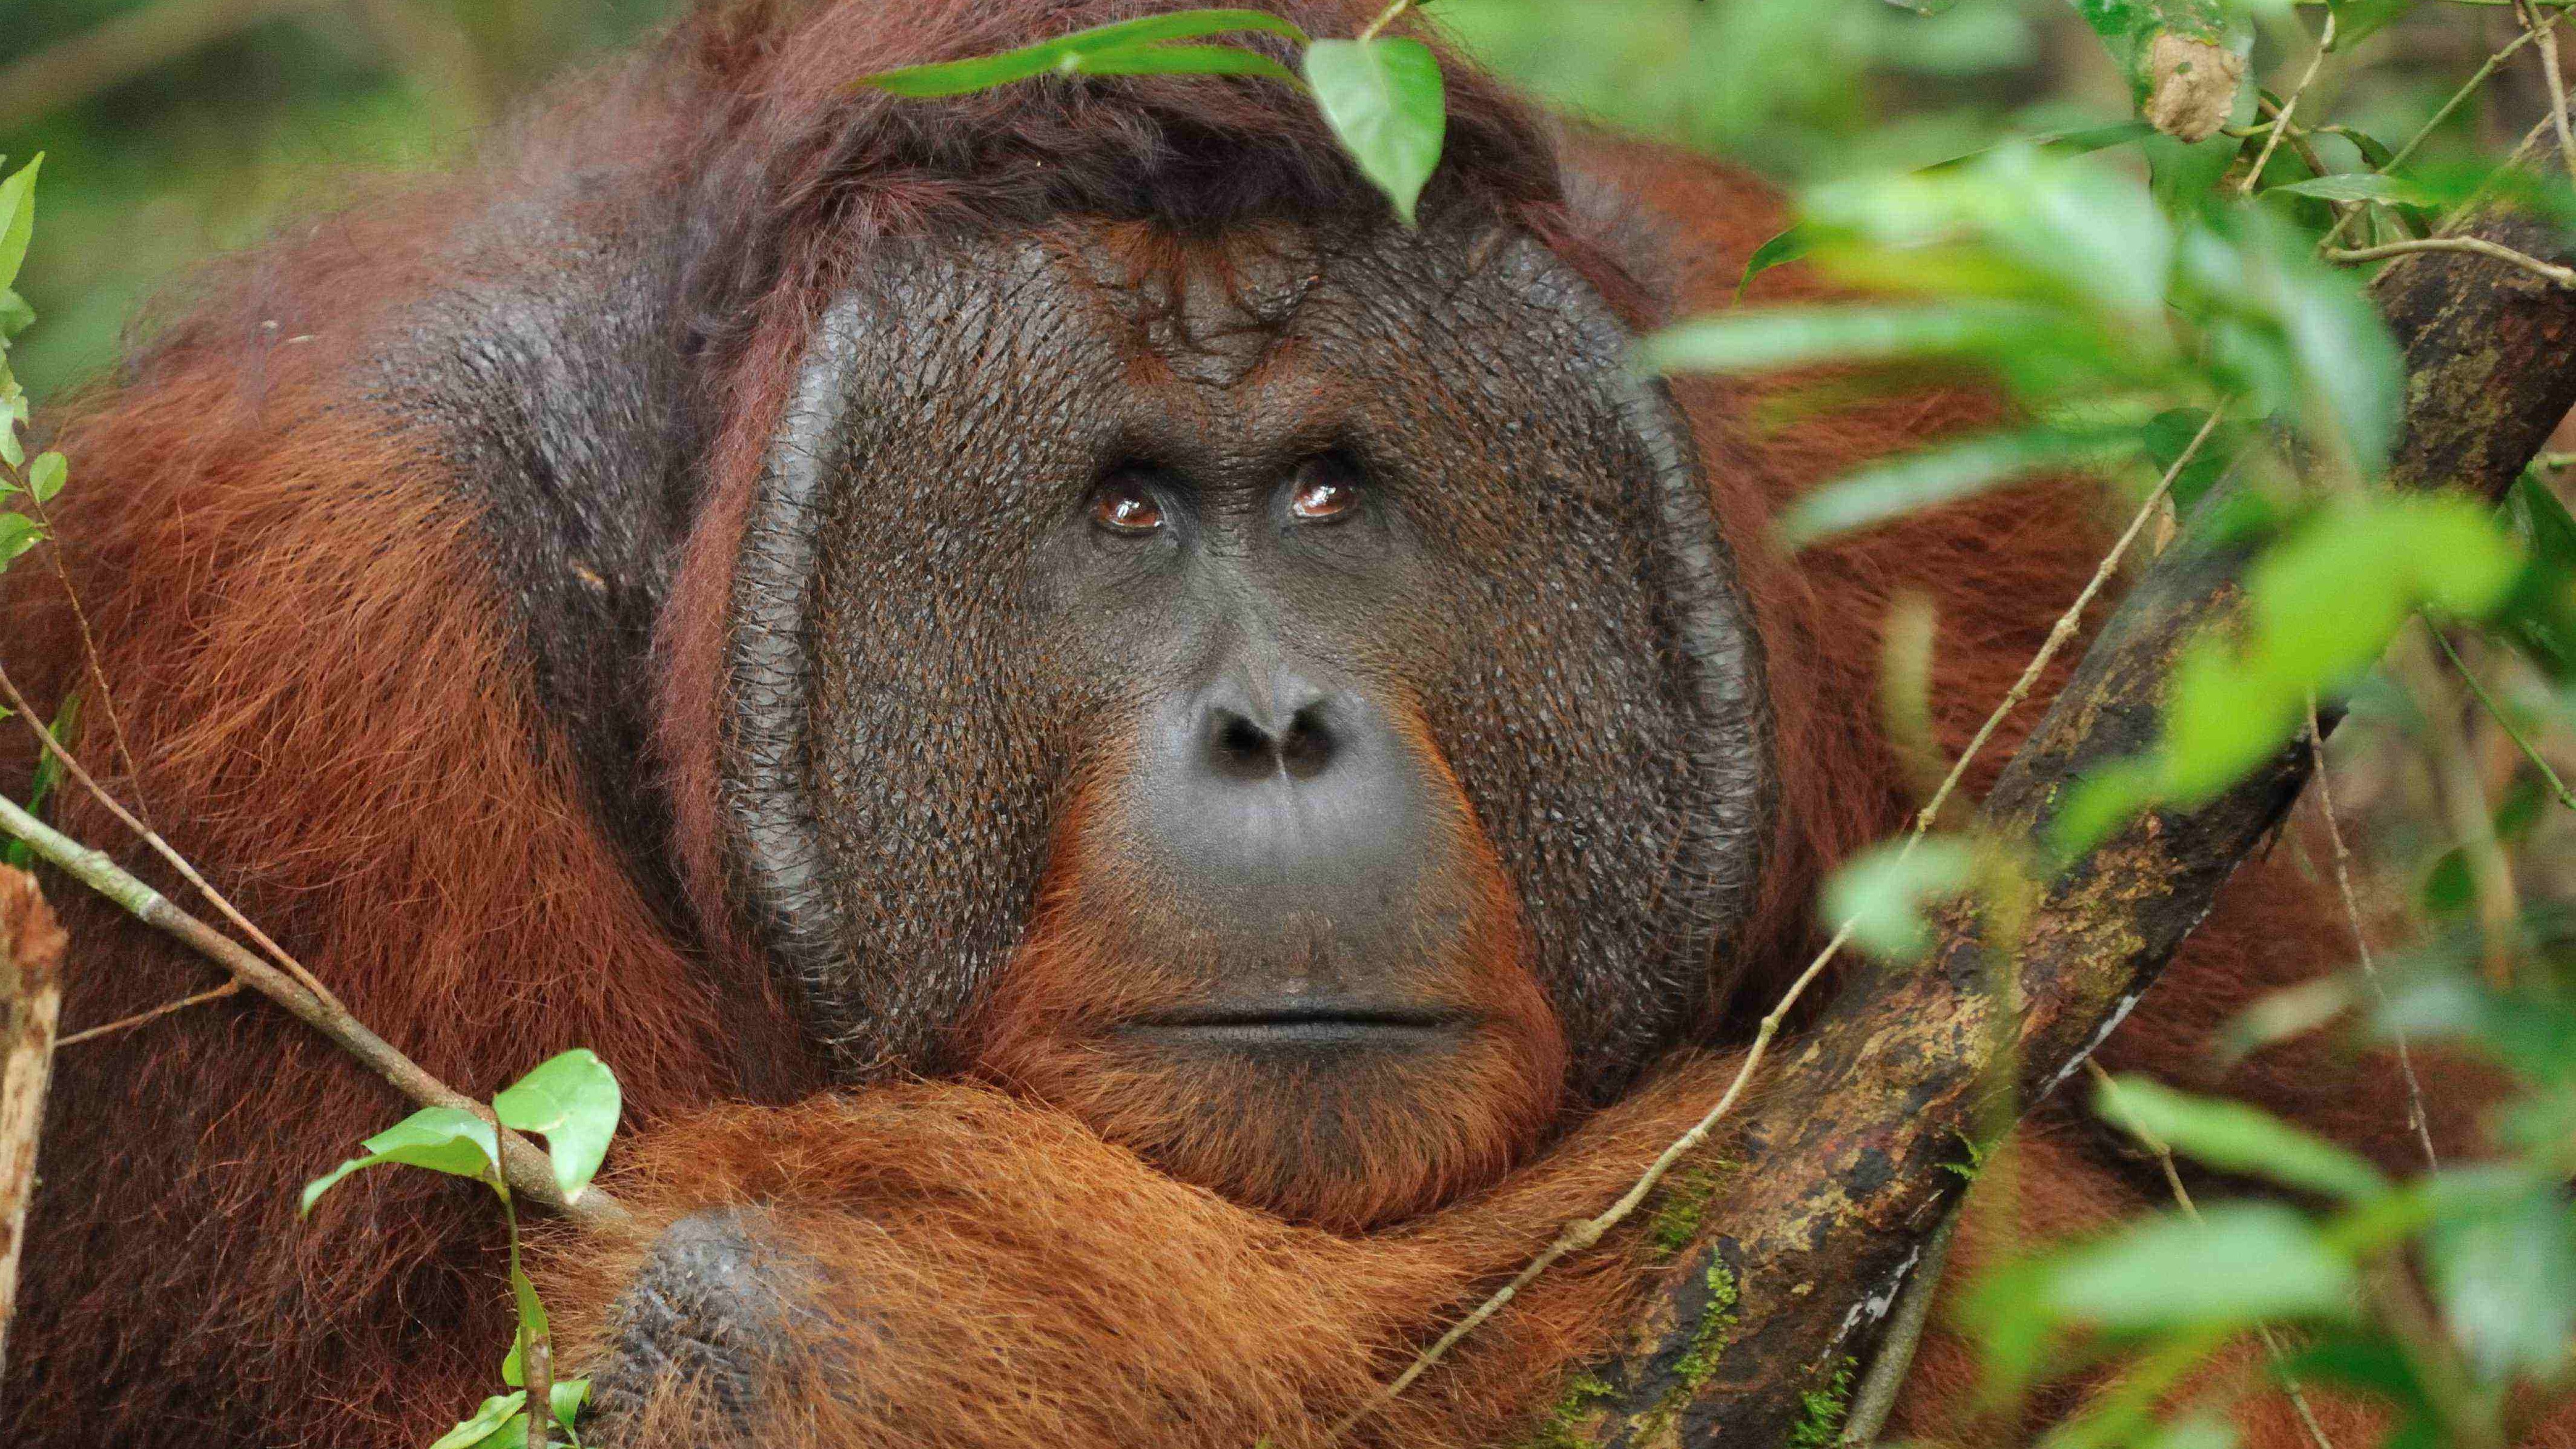 kalimantan wildlife diversity tour orangutan wildlife dayak culture, rain forest jungle trek guide trips borneo indonesia